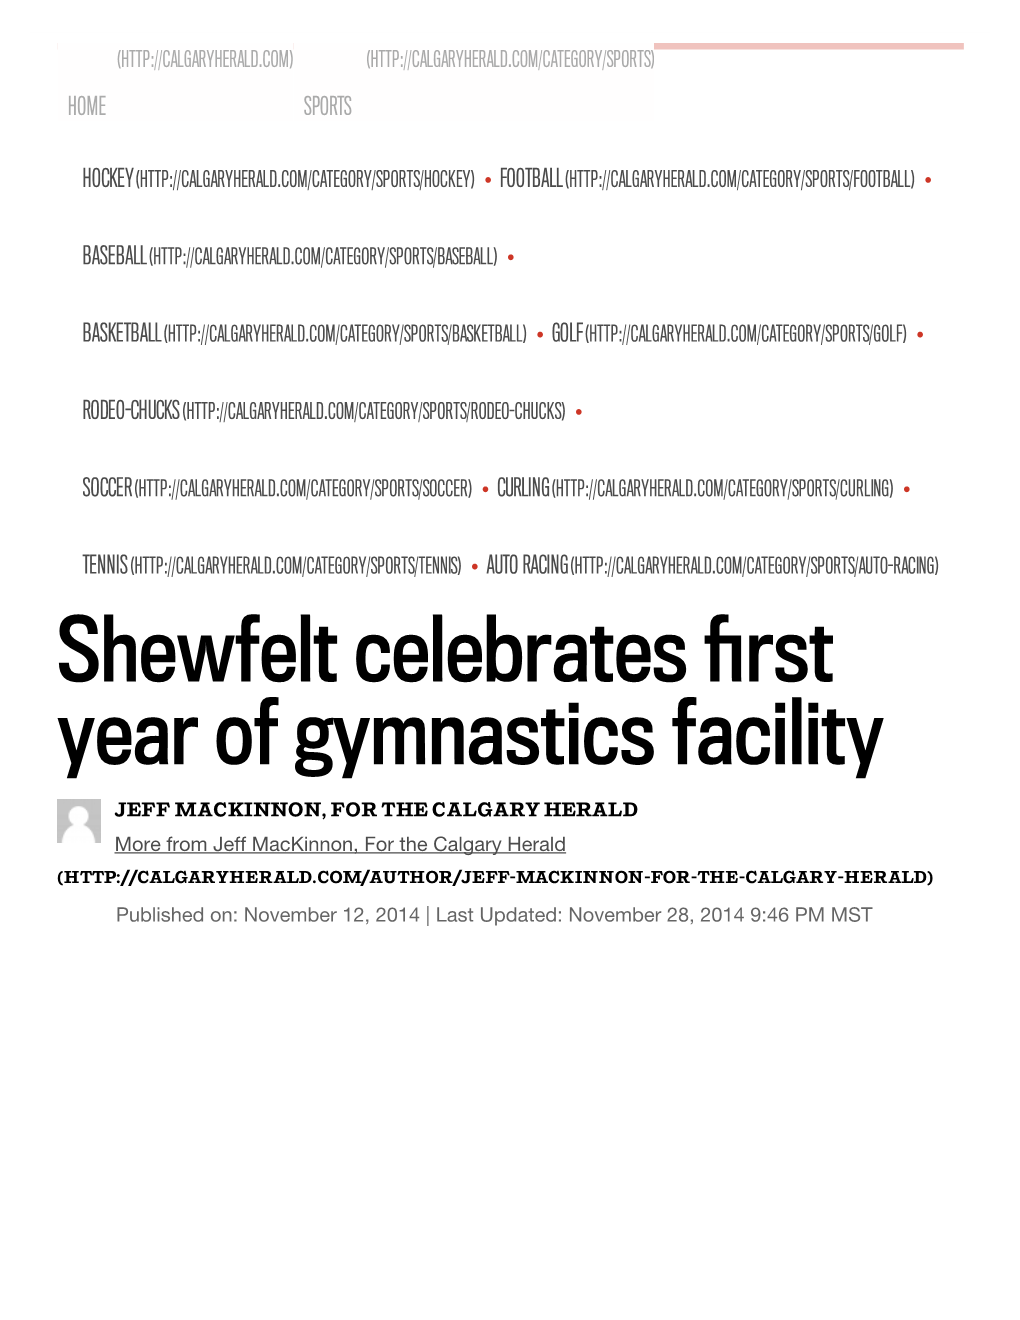 Shewfelt Celebrates First Year of Gymnastics Facility | Calgary Herald